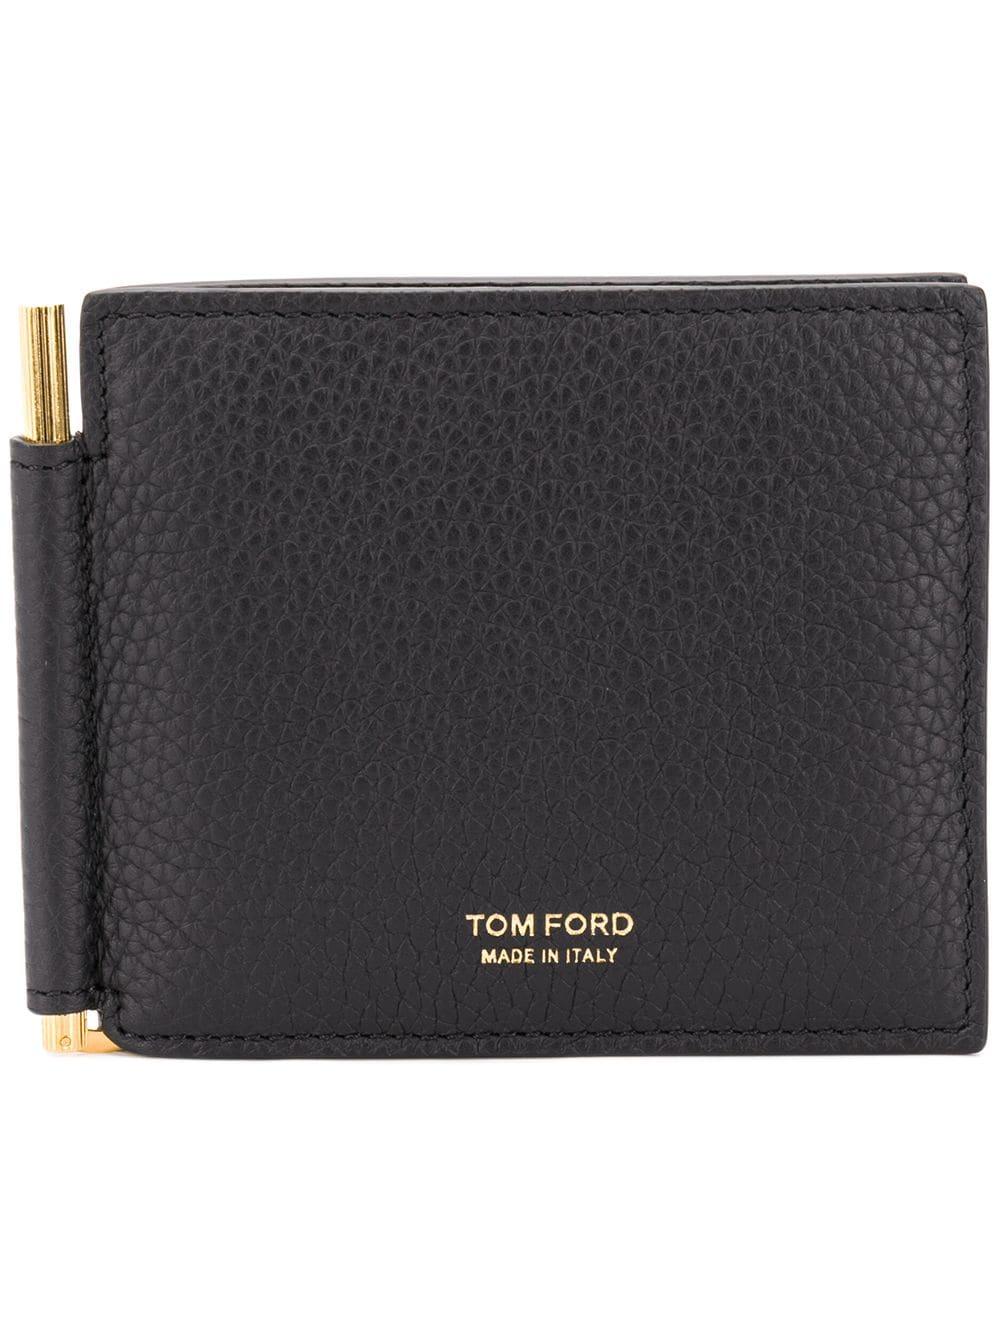 Tom Ford Money Clip Wallet in Black for Men - Save 38% - Lyst